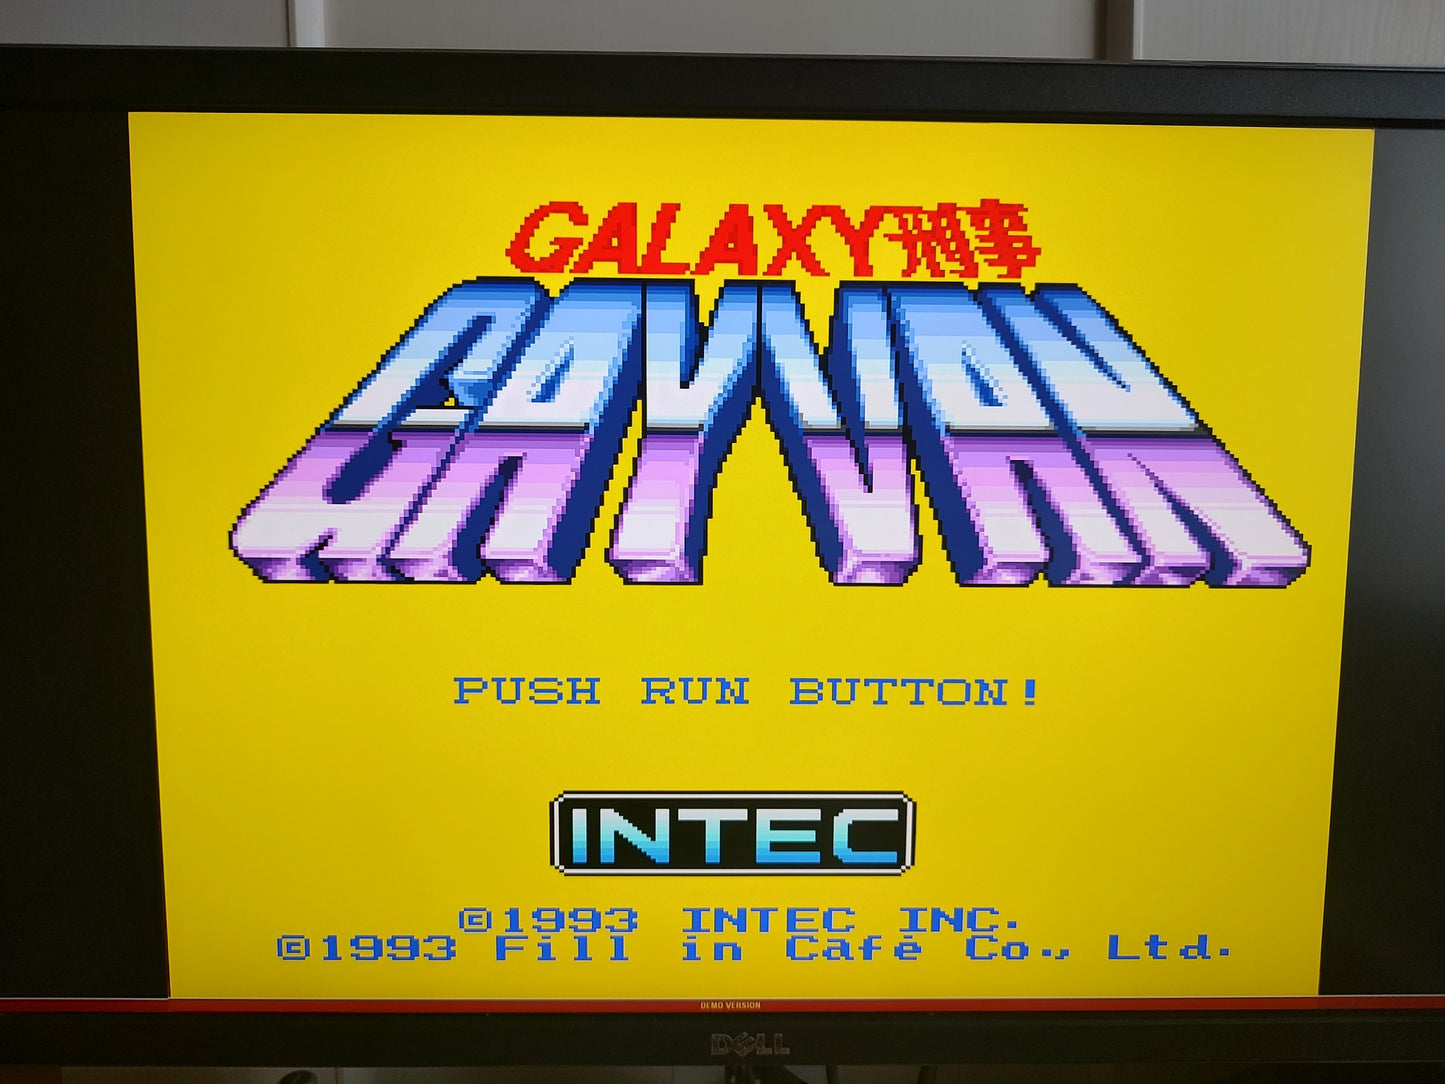 GALAXY DEKA GAYVAN PC Engine CD-ROM2 Game, w/Manual and Case set, Working-g0413-